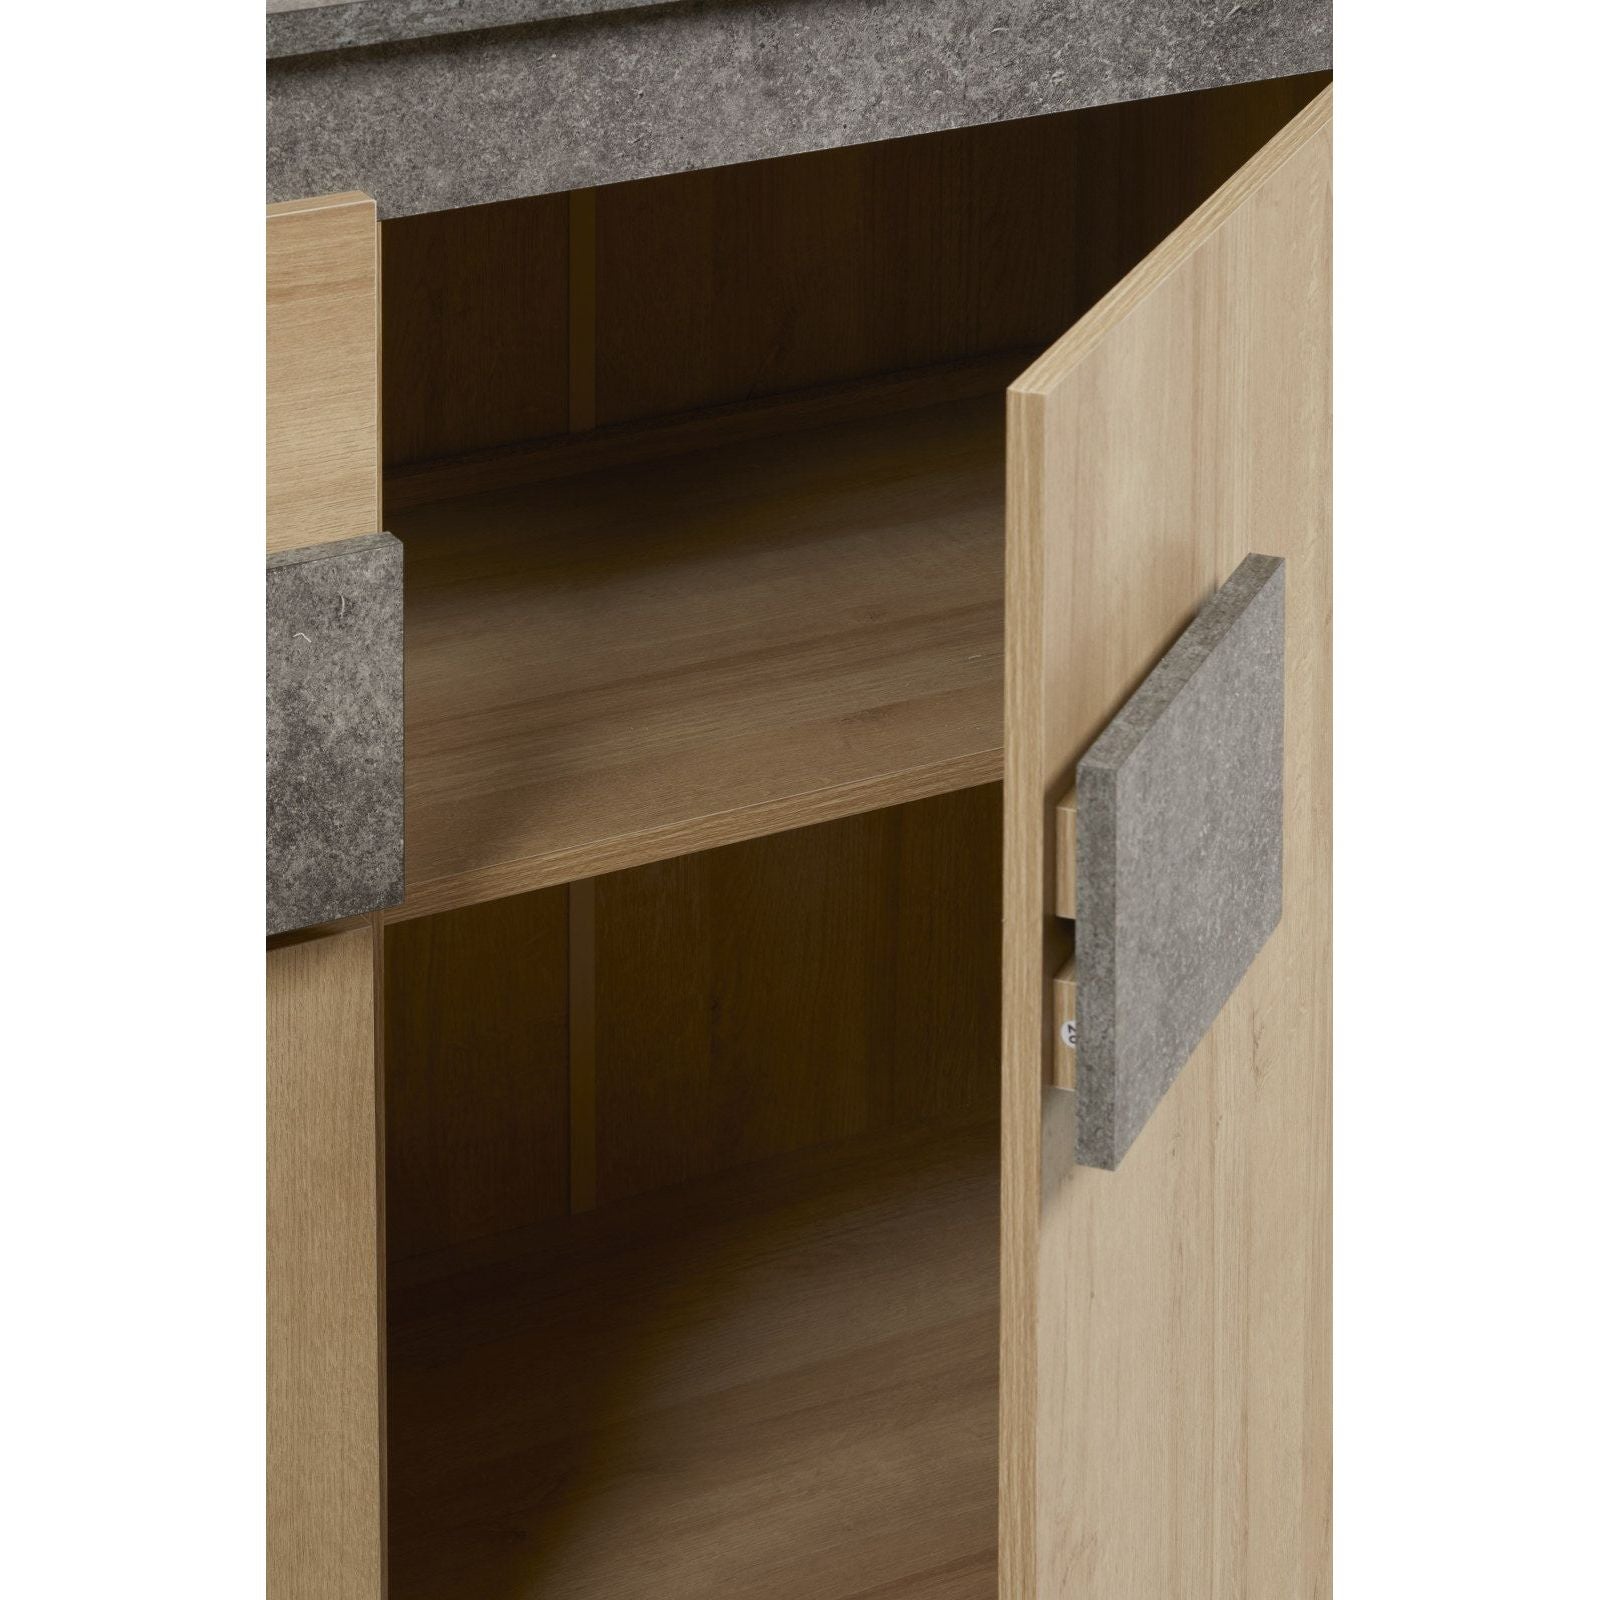 Dresser | Furniture series Ariya | brown, natural, light gray |